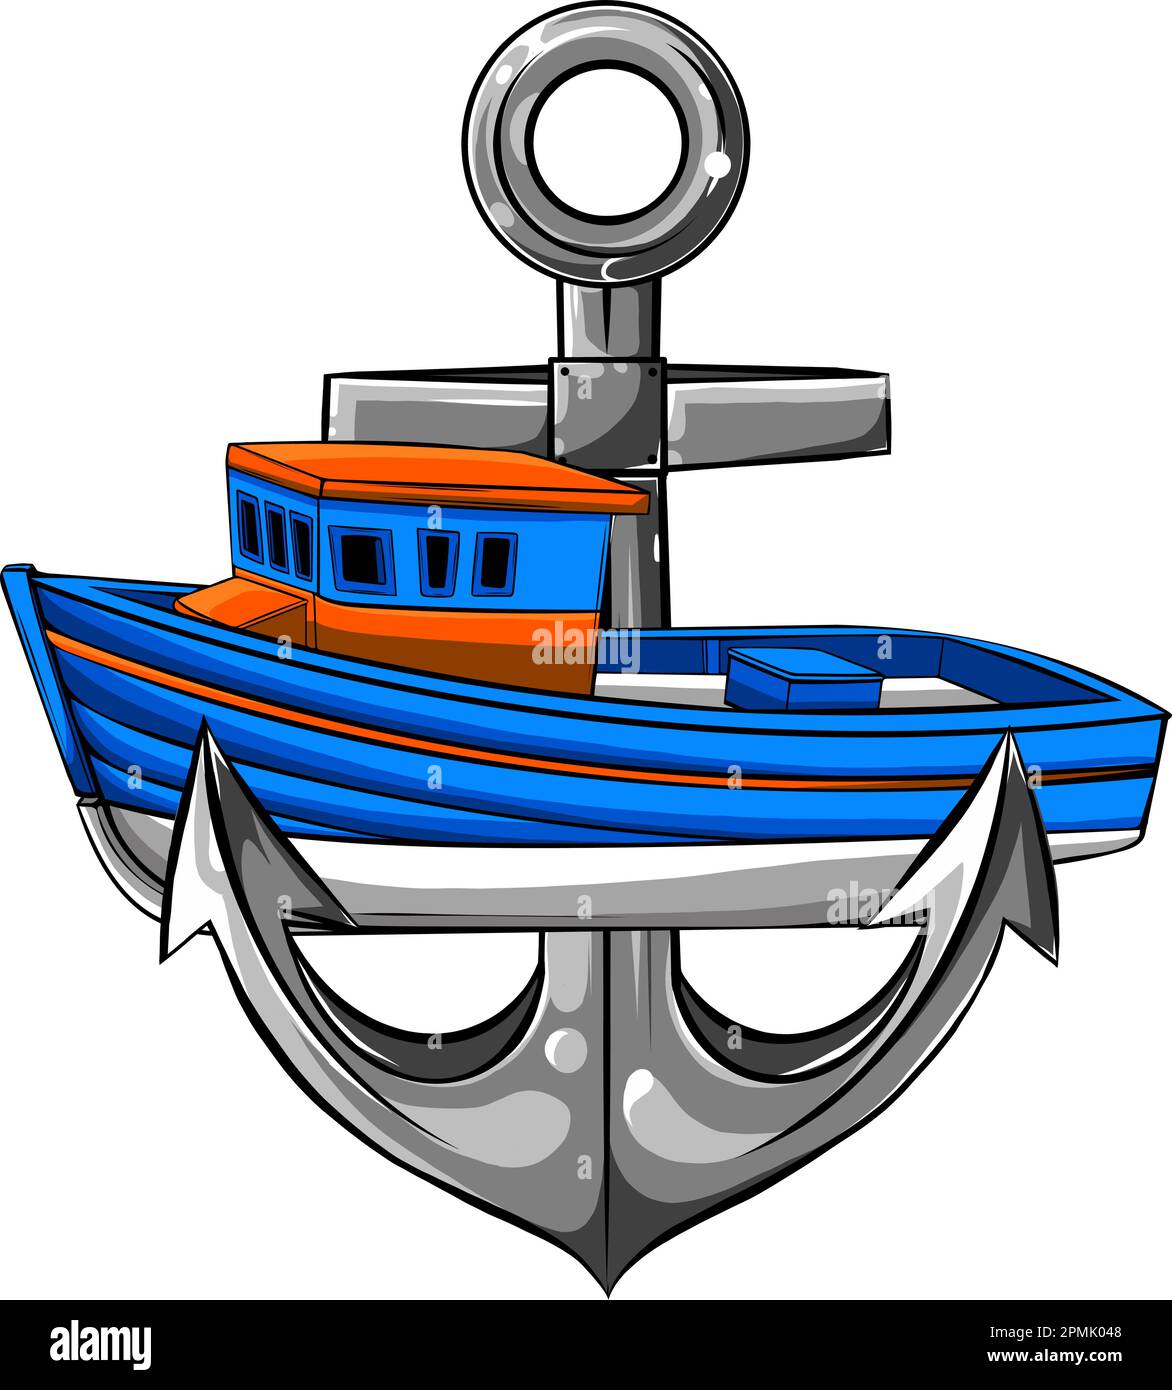 https://c8.alamy.com/comp/2PMK048/nautical-anchor-isolated-white-background-ship-anchor-vintage-icon-2PMK048.jpg